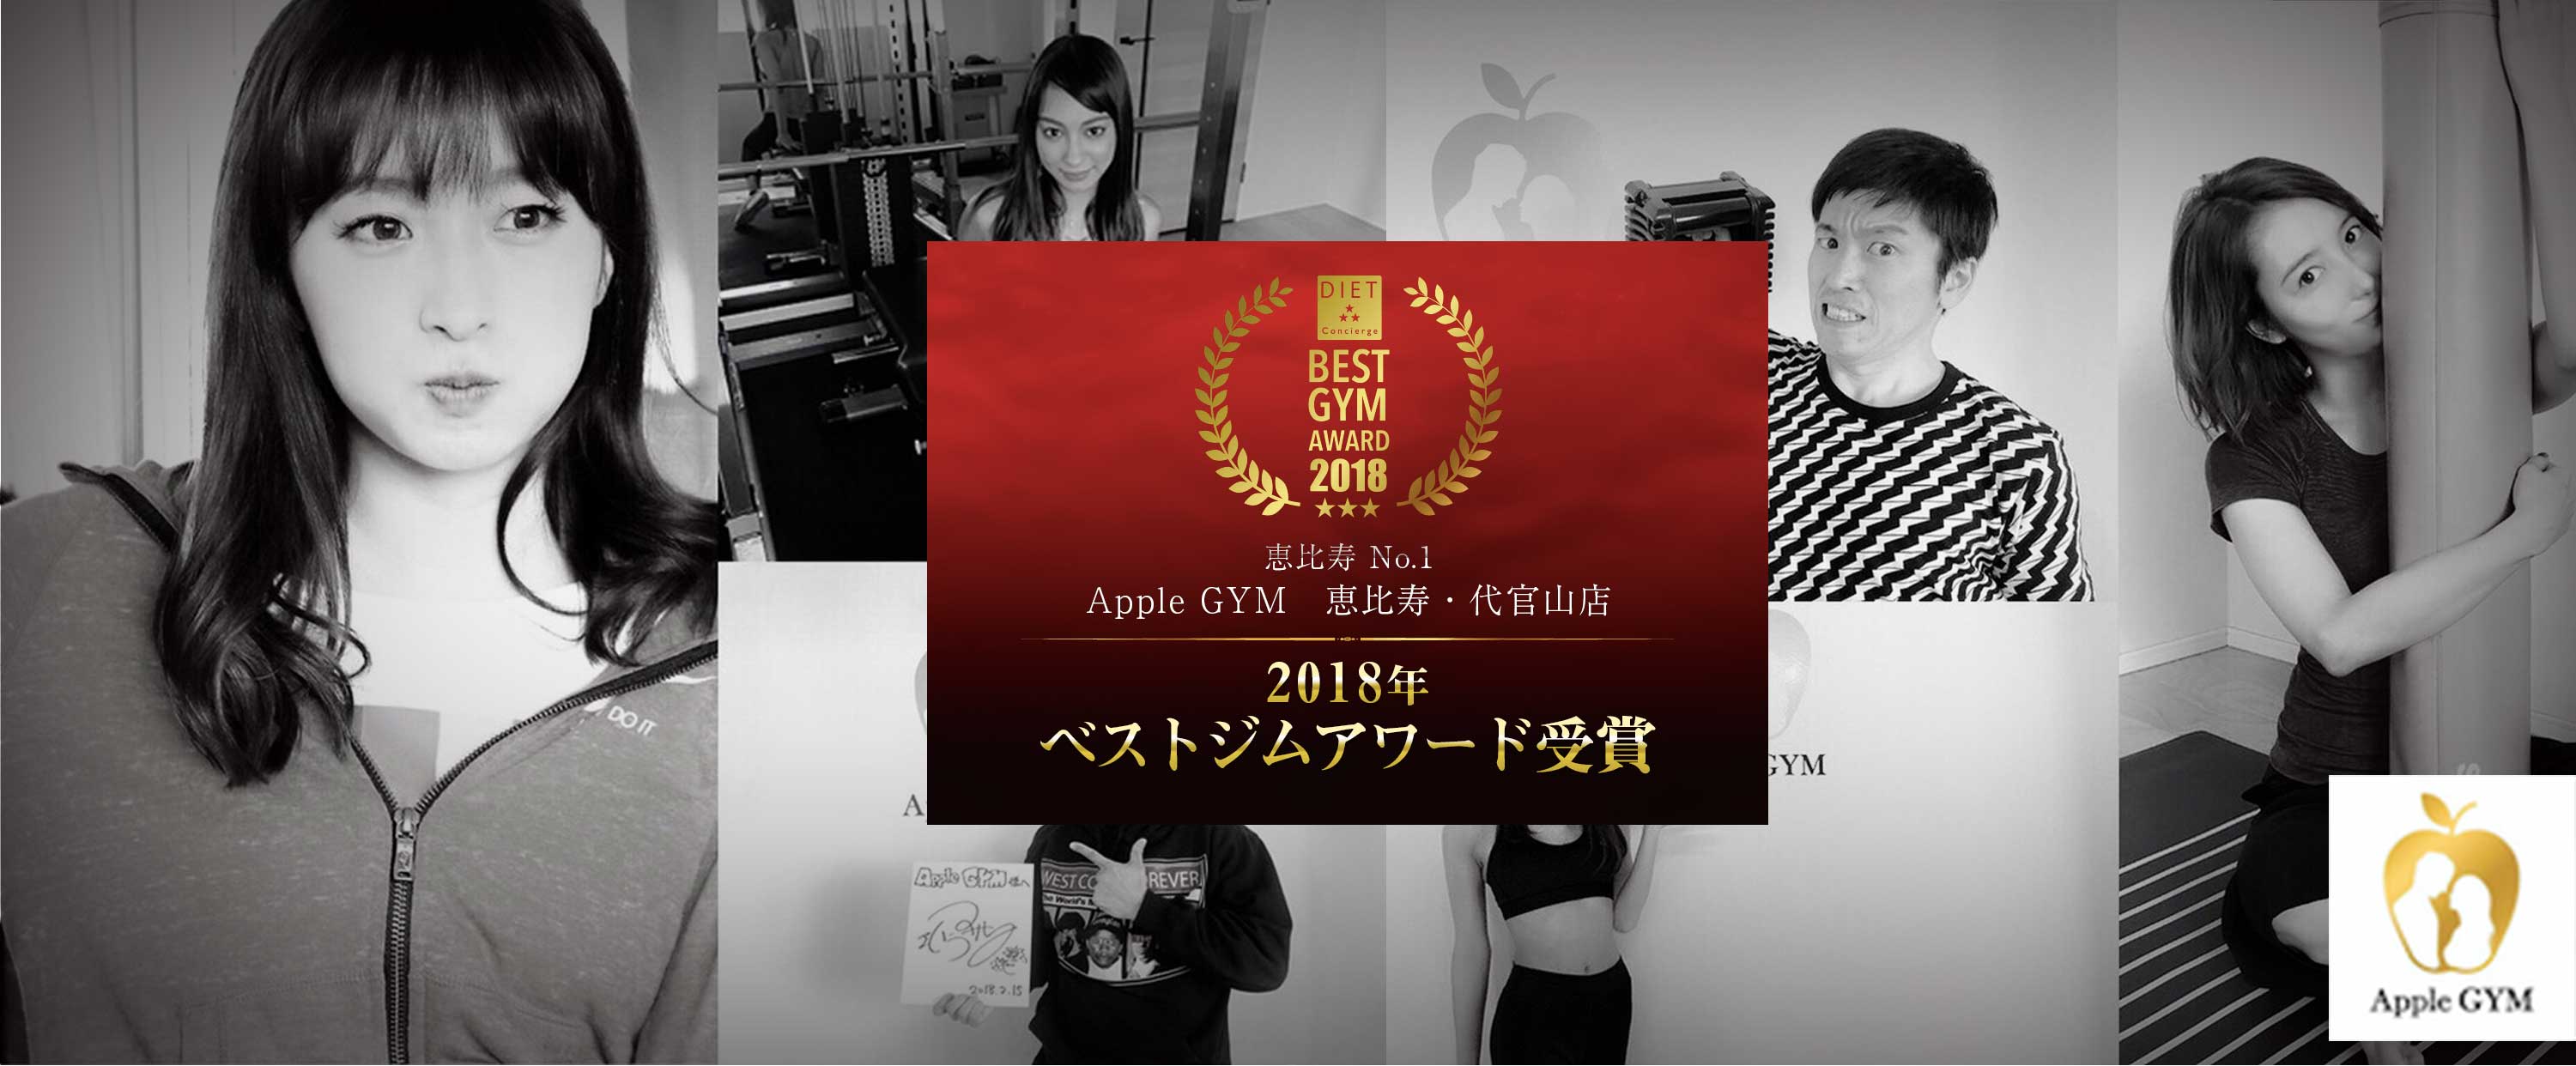 Apple Gym アップルジム のコース料金と店舗情報 芸能人人気no 1 芸能人の衣装通販ブログ